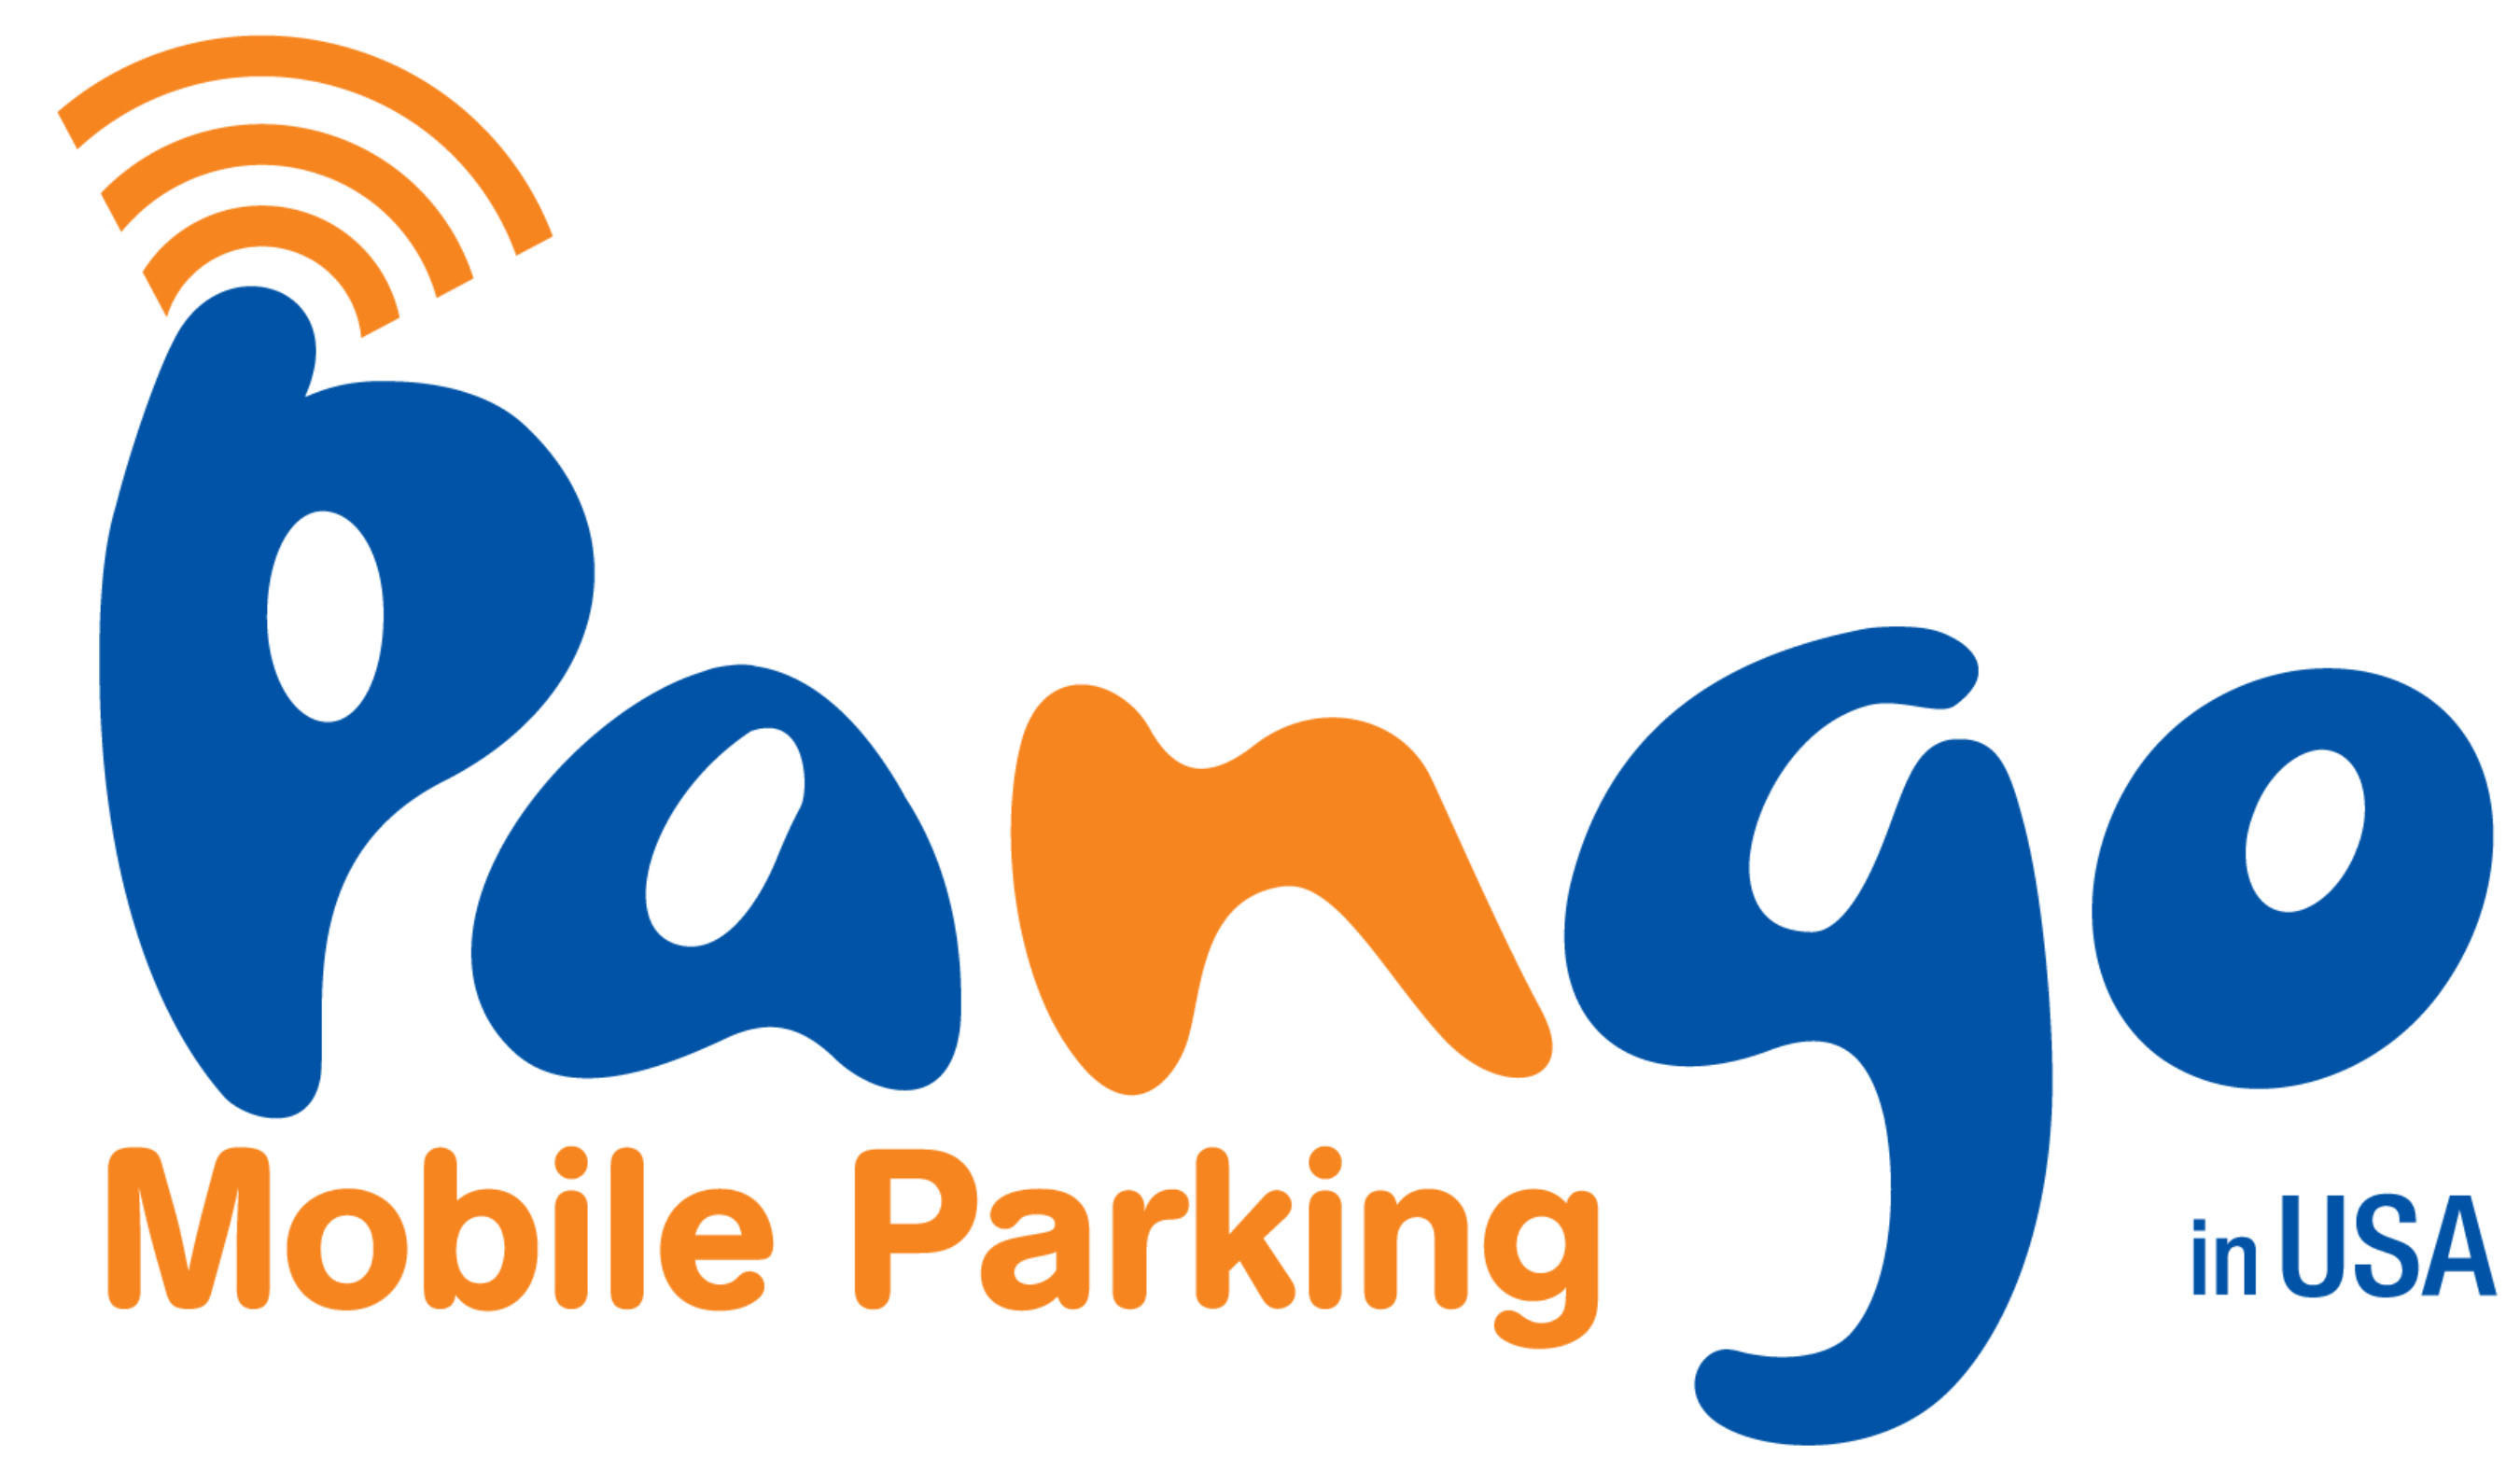 Pango logo